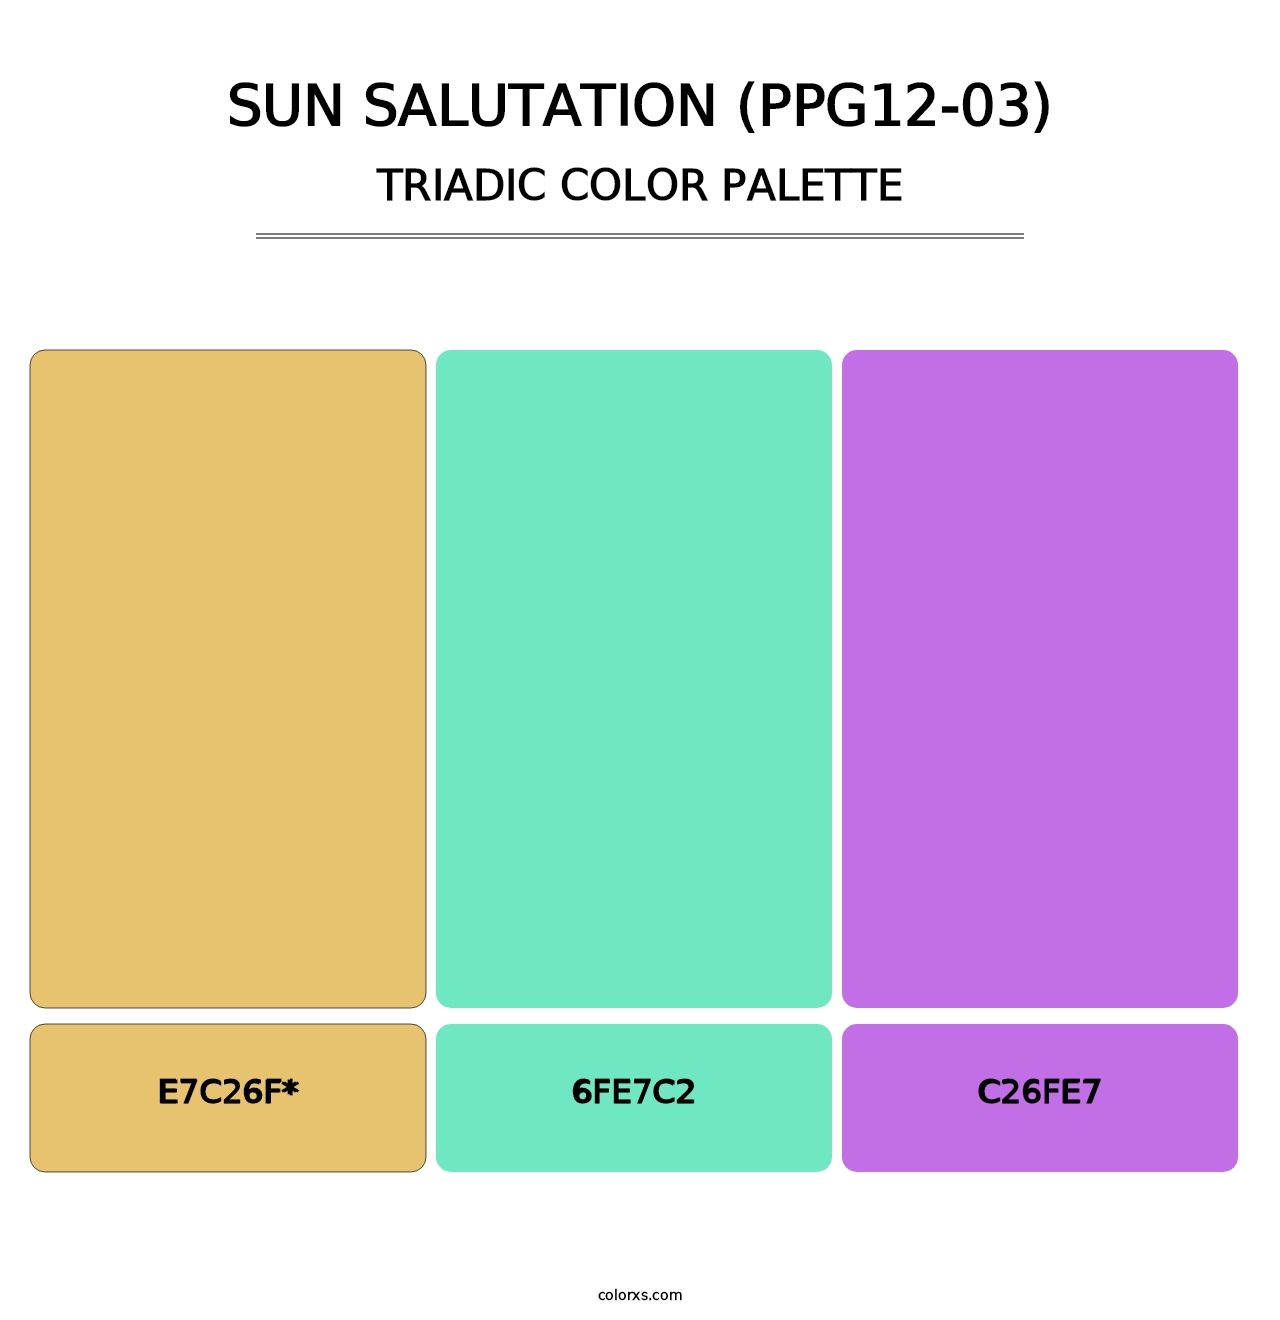 Sun Salutation (PPG12-03) - Triadic Color Palette